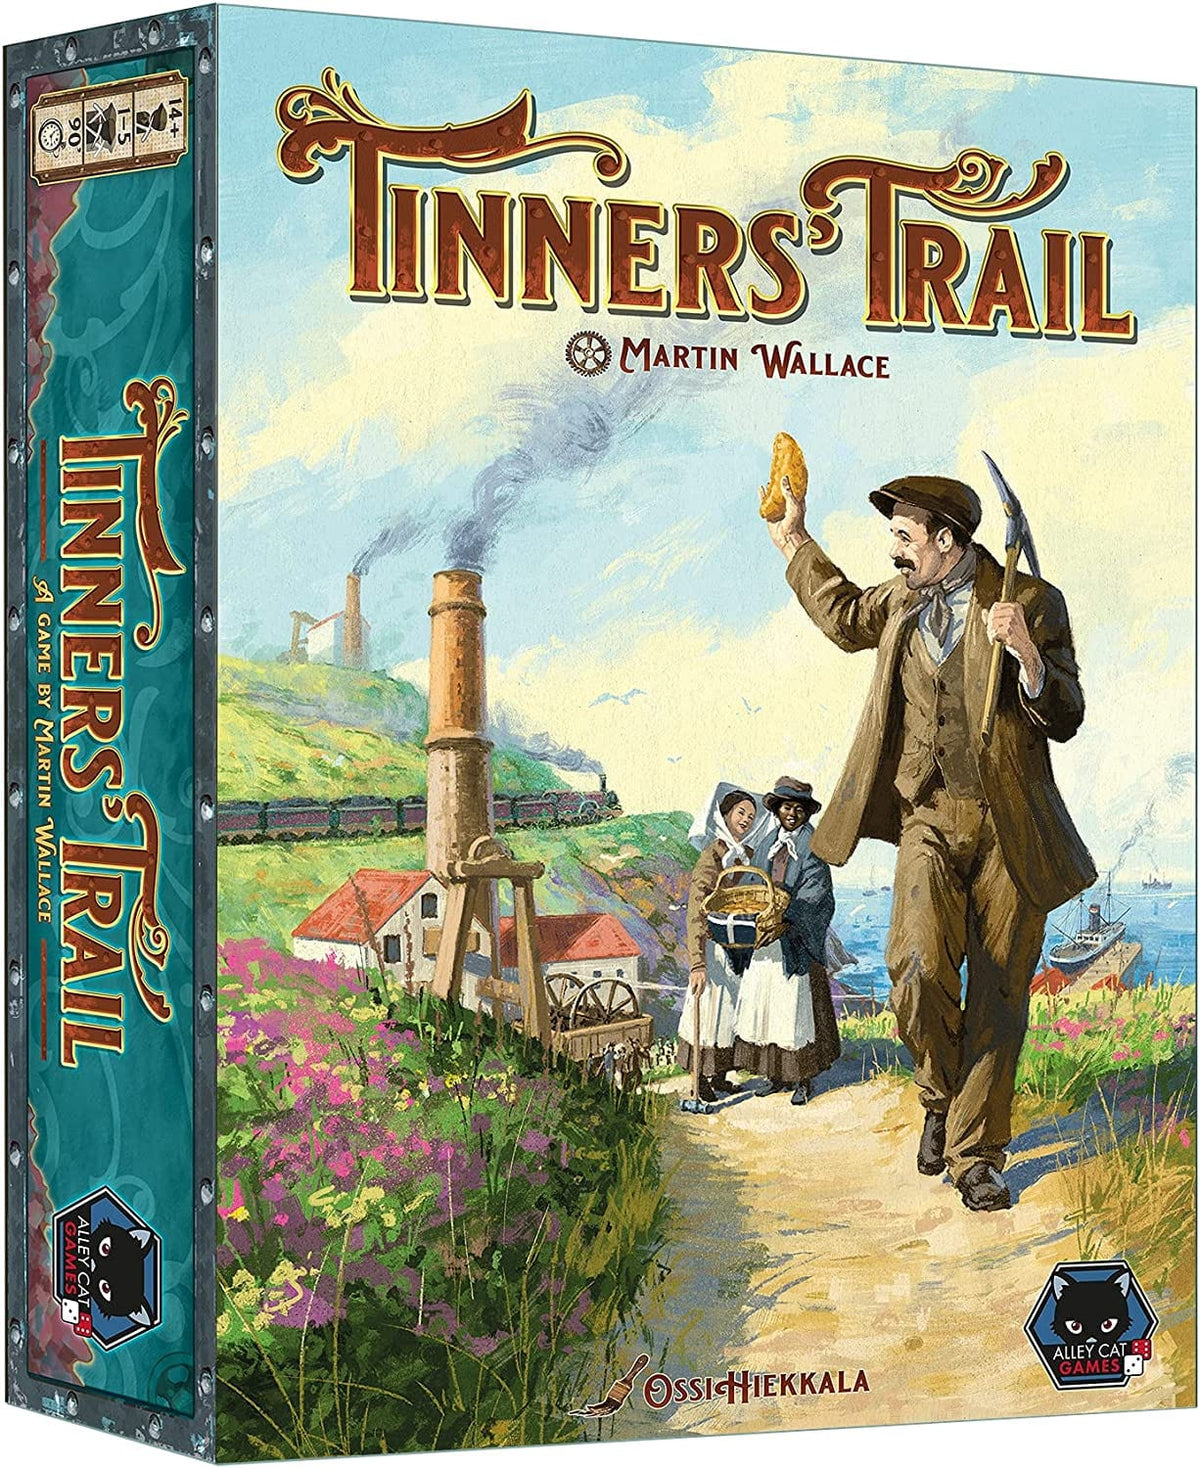 Tinners' Trail - Third Eye